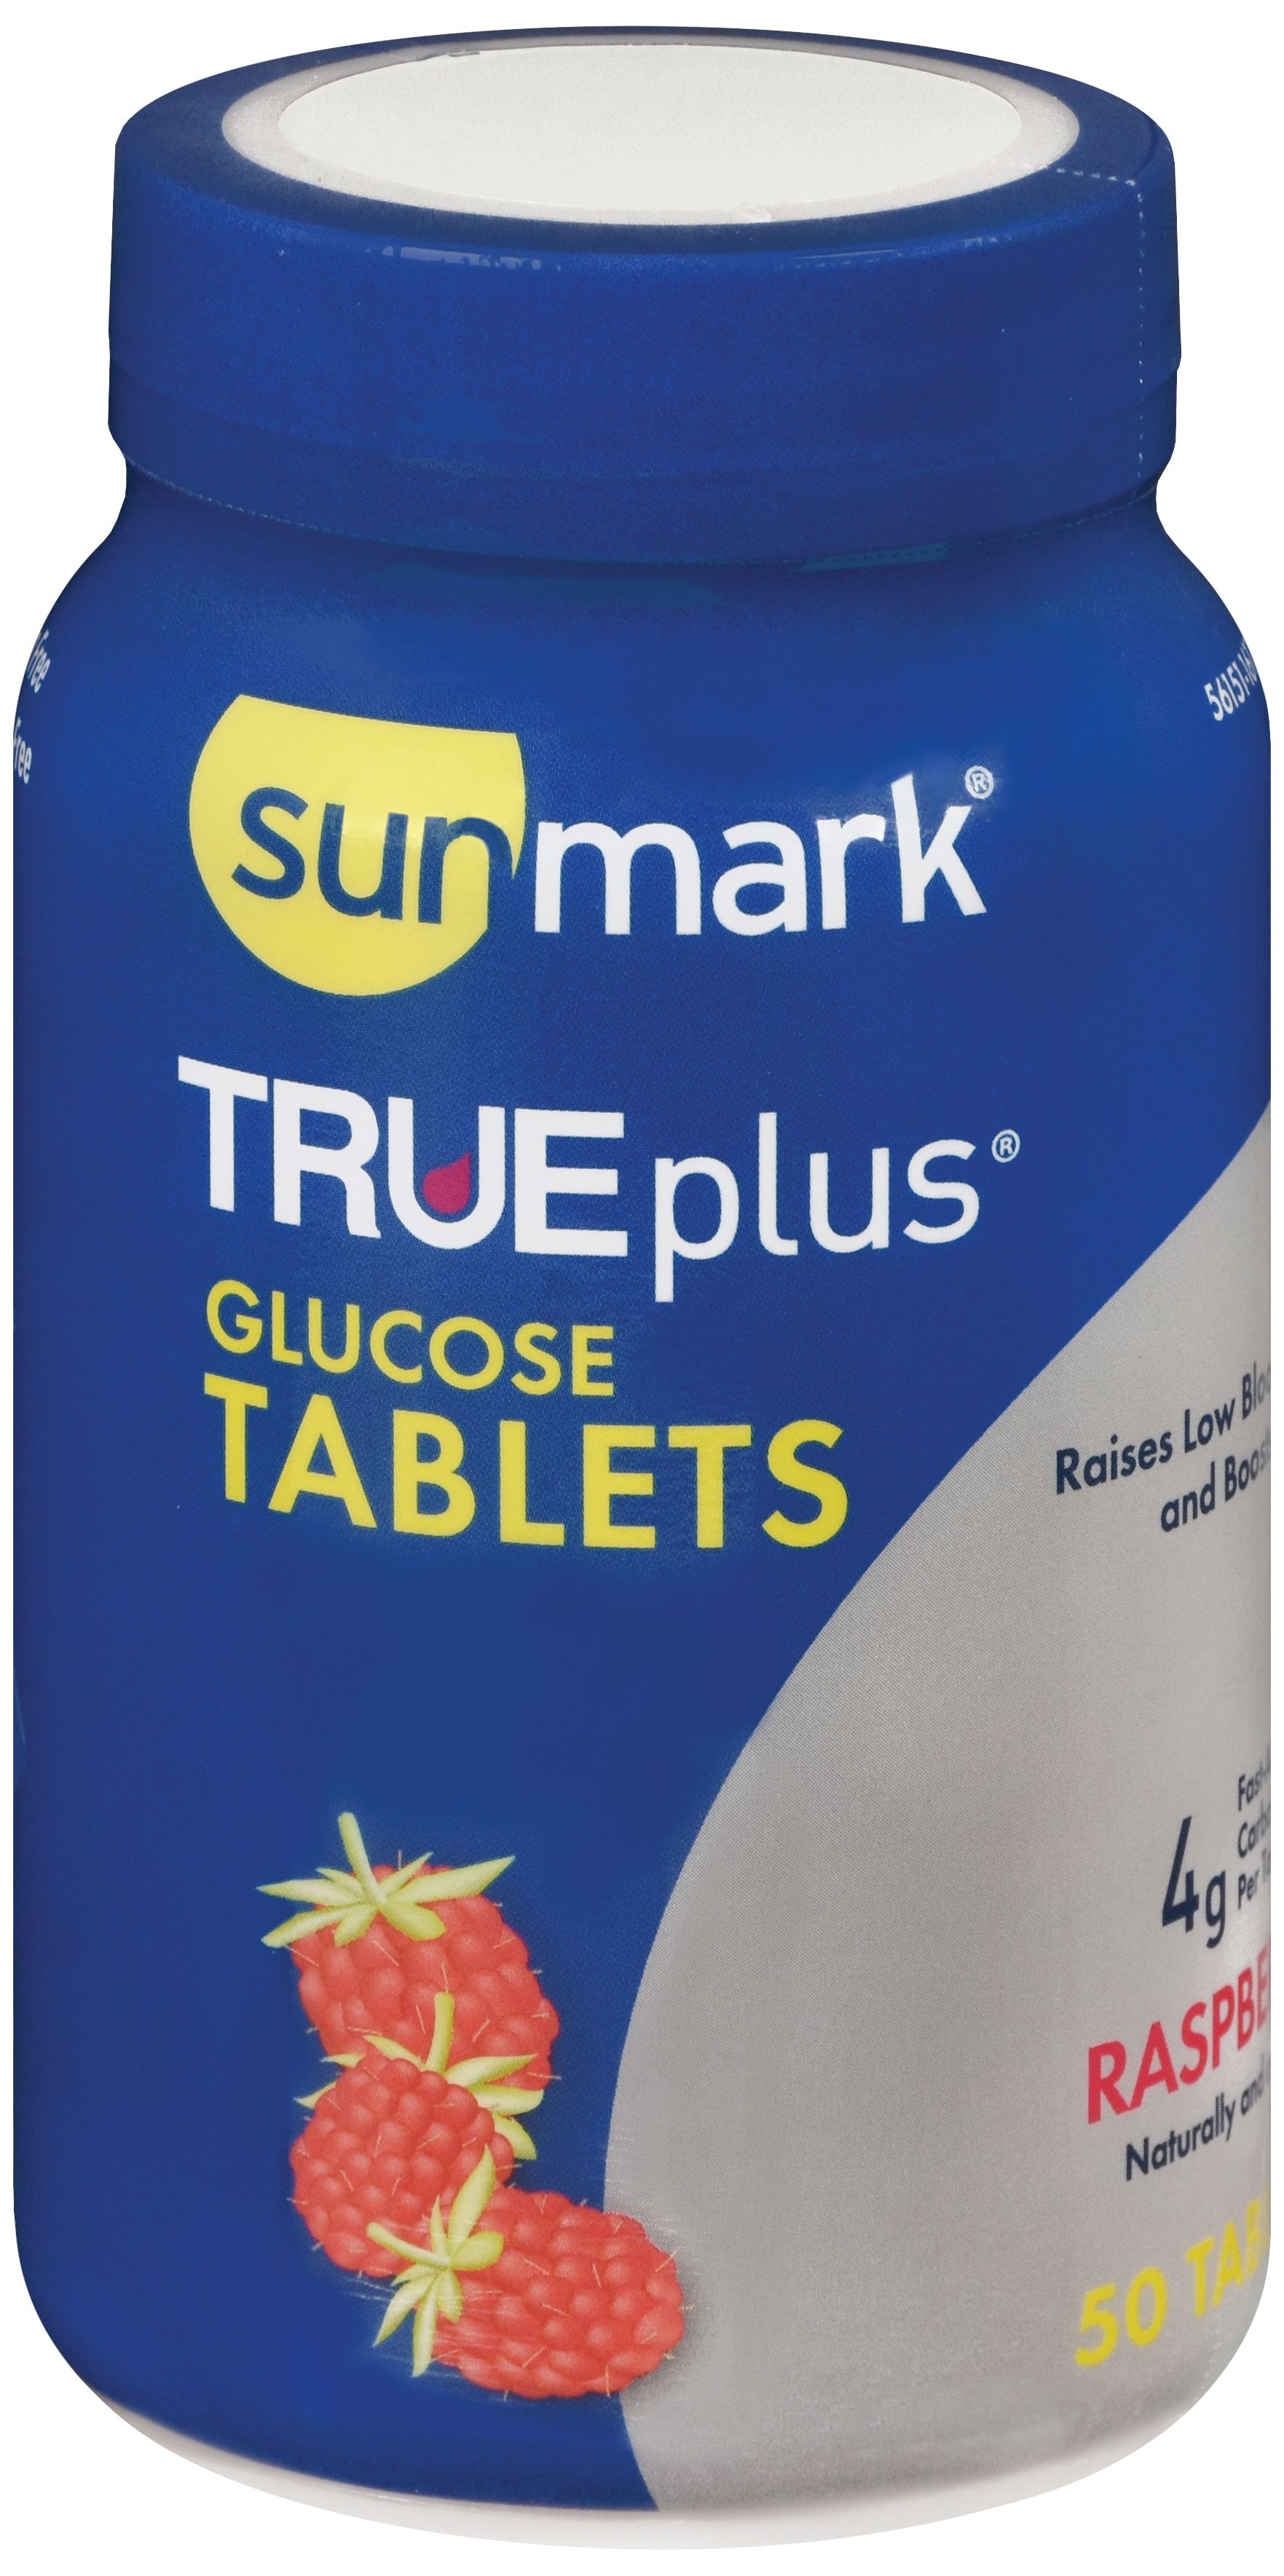 DISCSunmark TRUEplus Glucose Tablets, Raspberry - 50 ct